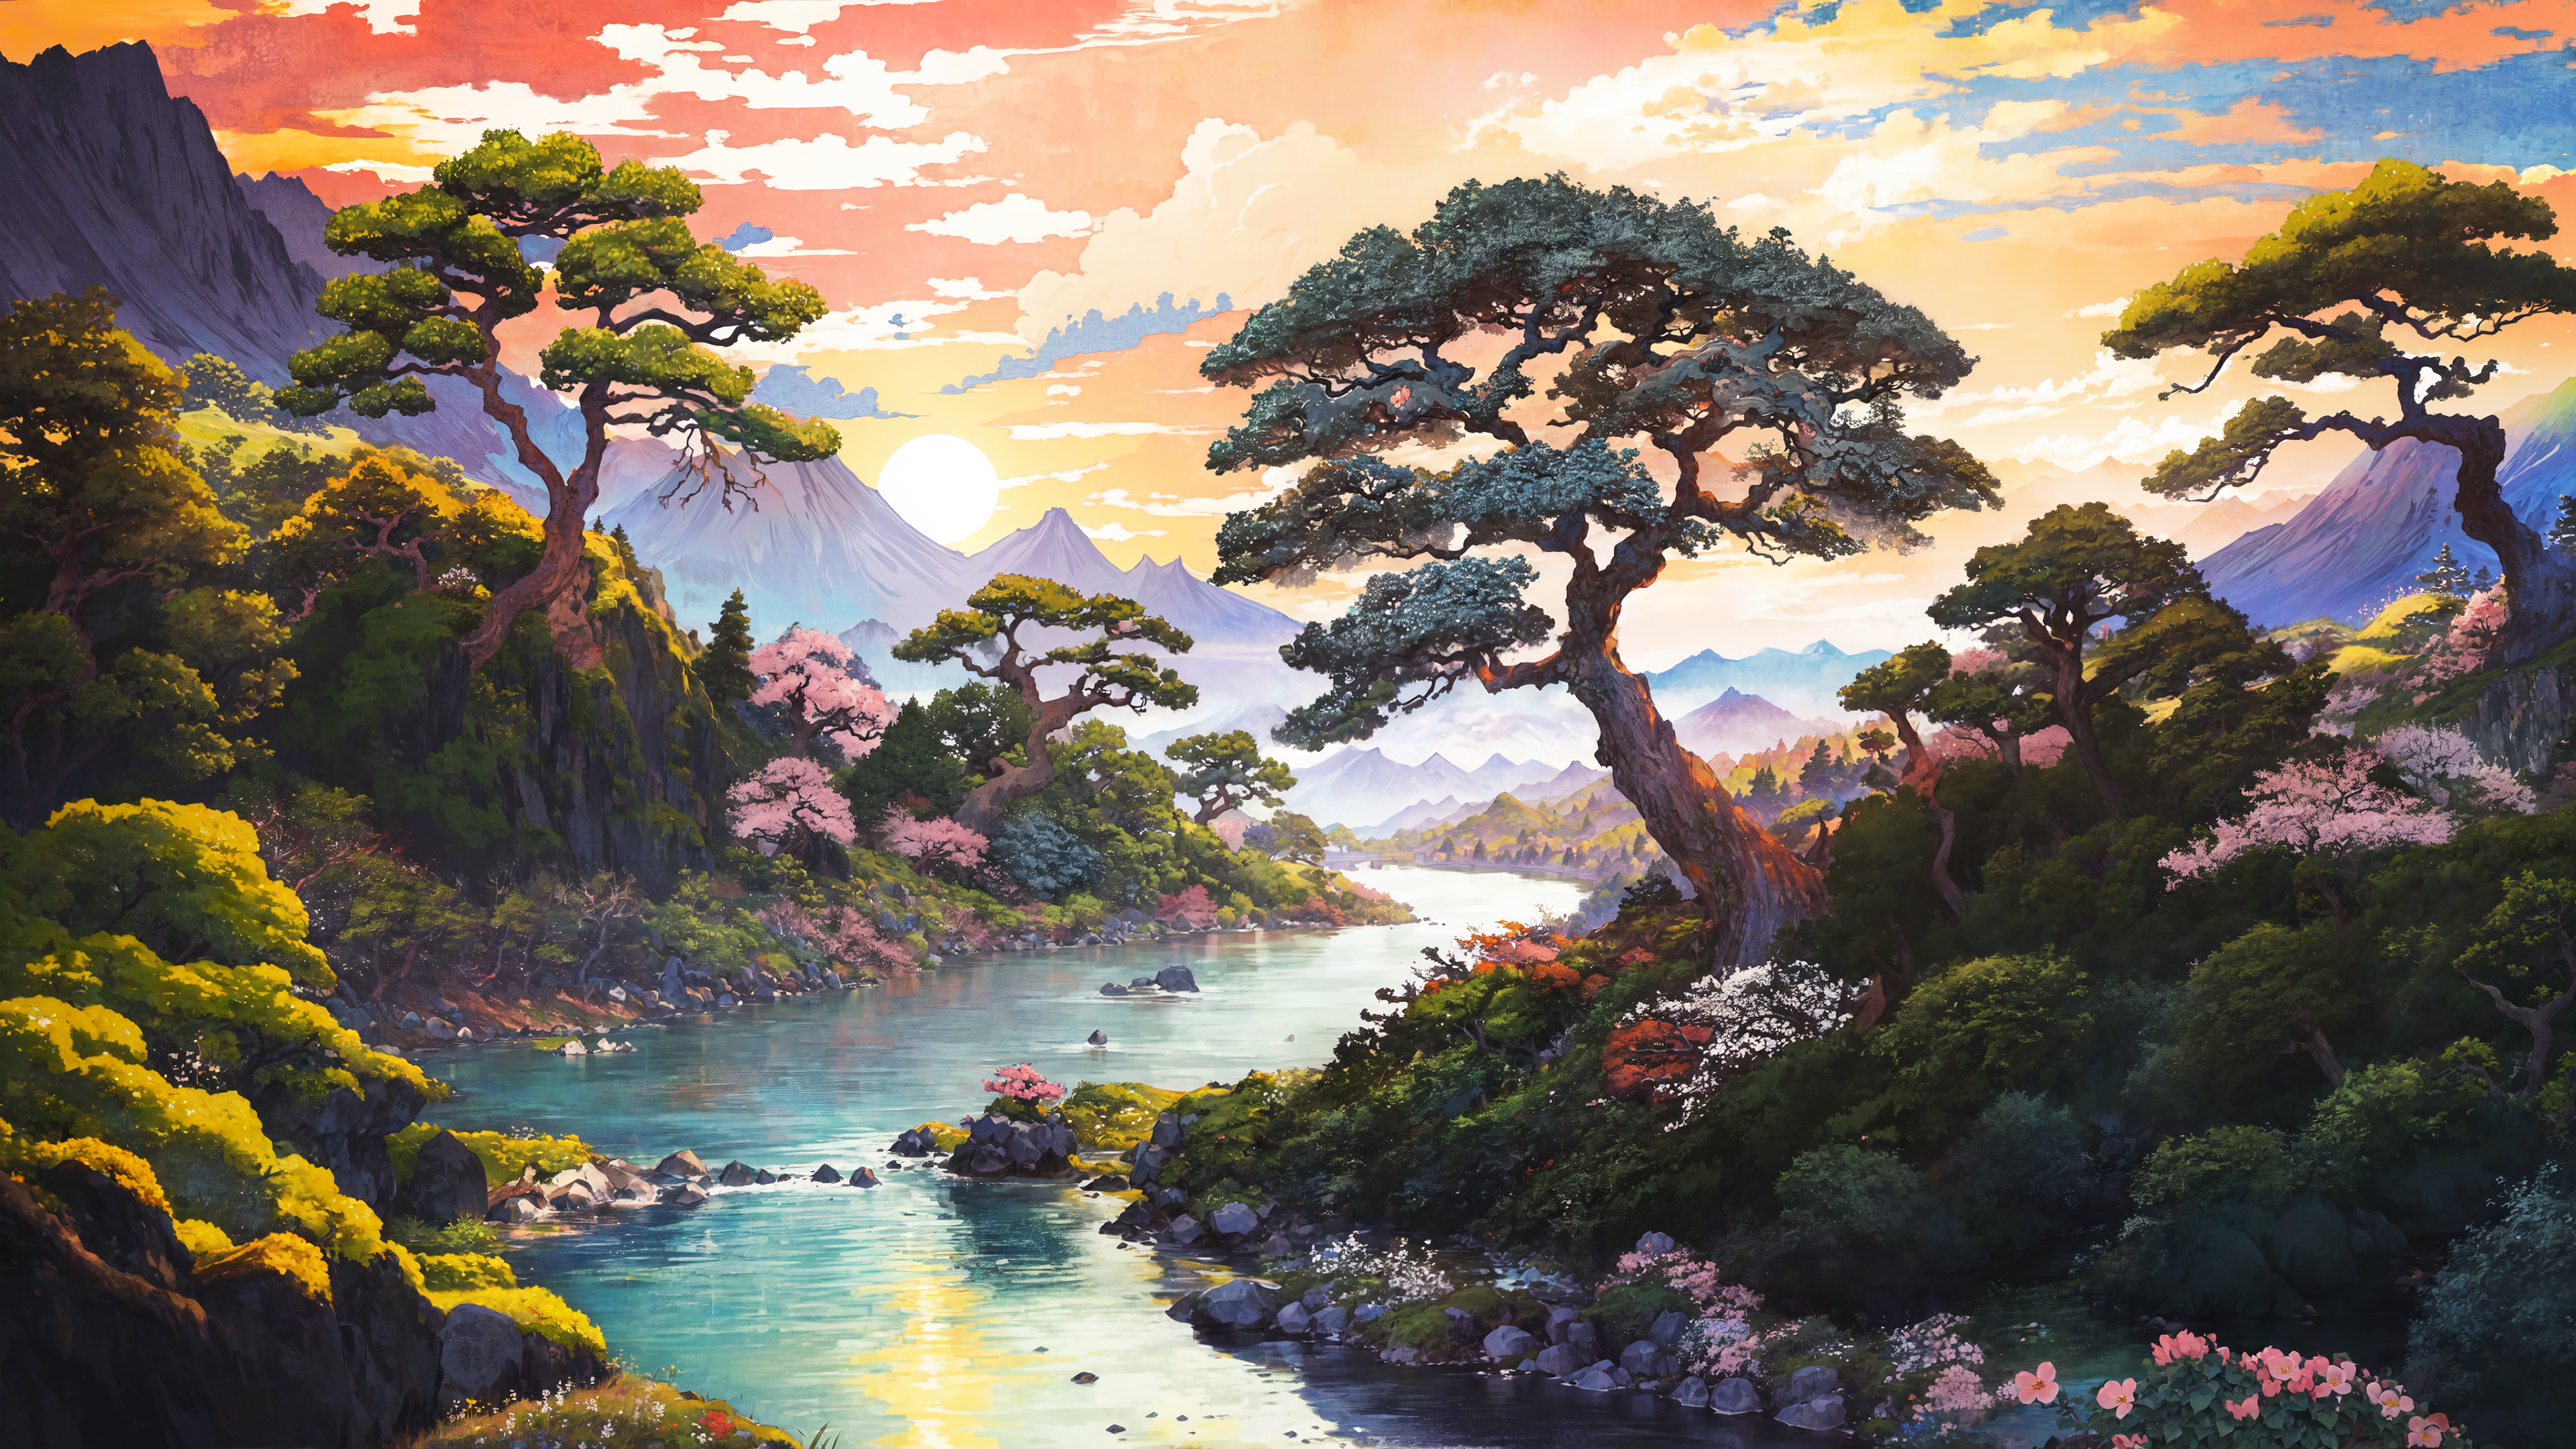 General 3840x2160 4K nature AI art artwork landscape river trees forest Sun mountains clouds rocks